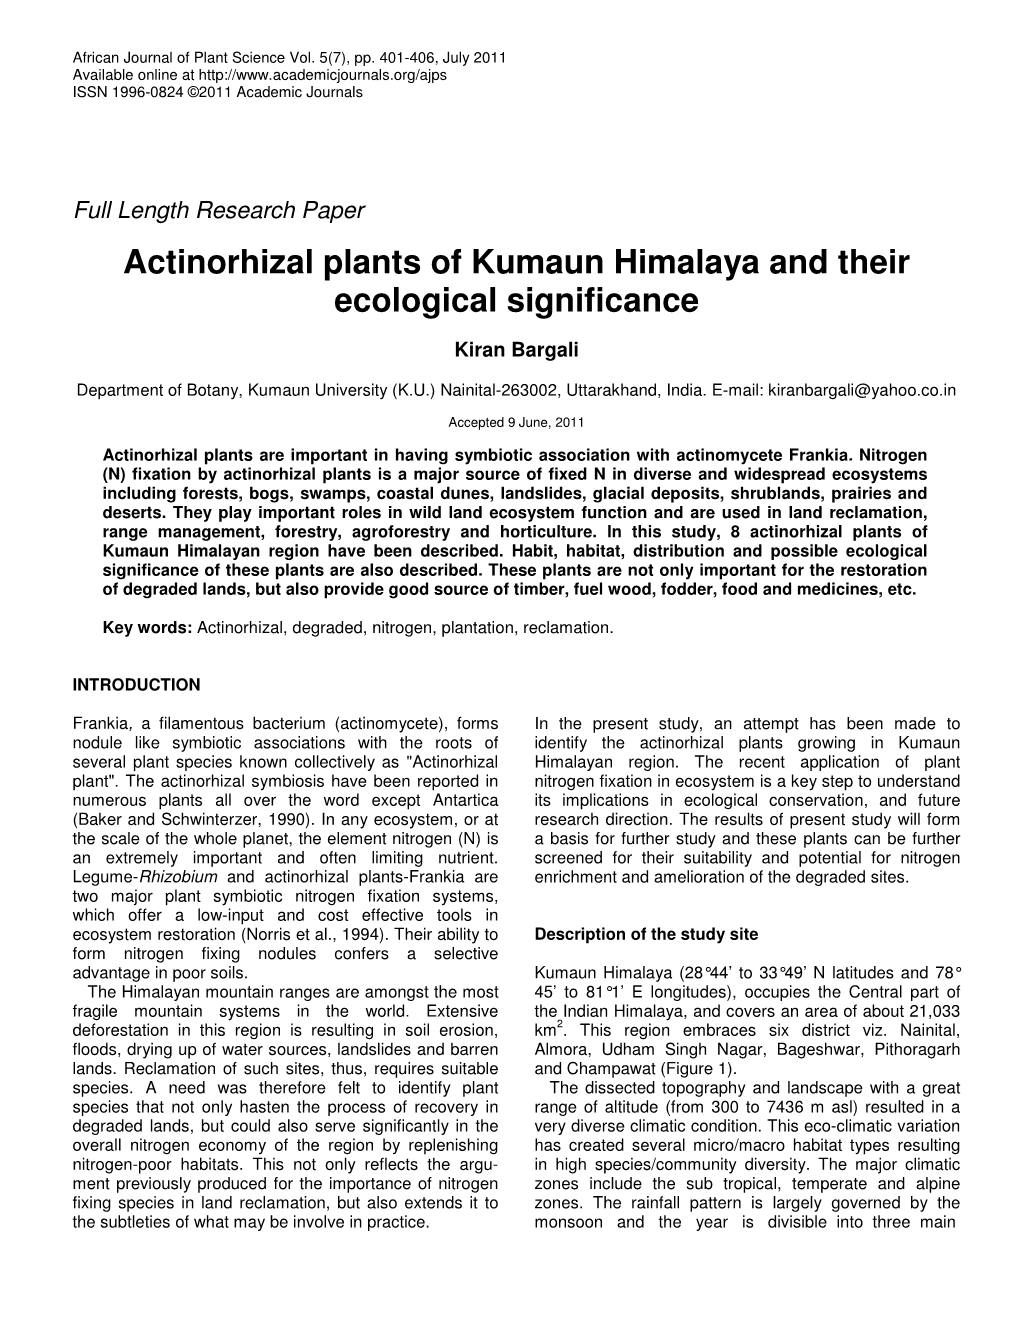 Actinorhizal Plants of Kumaun Himalaya and Their Ecological Significance